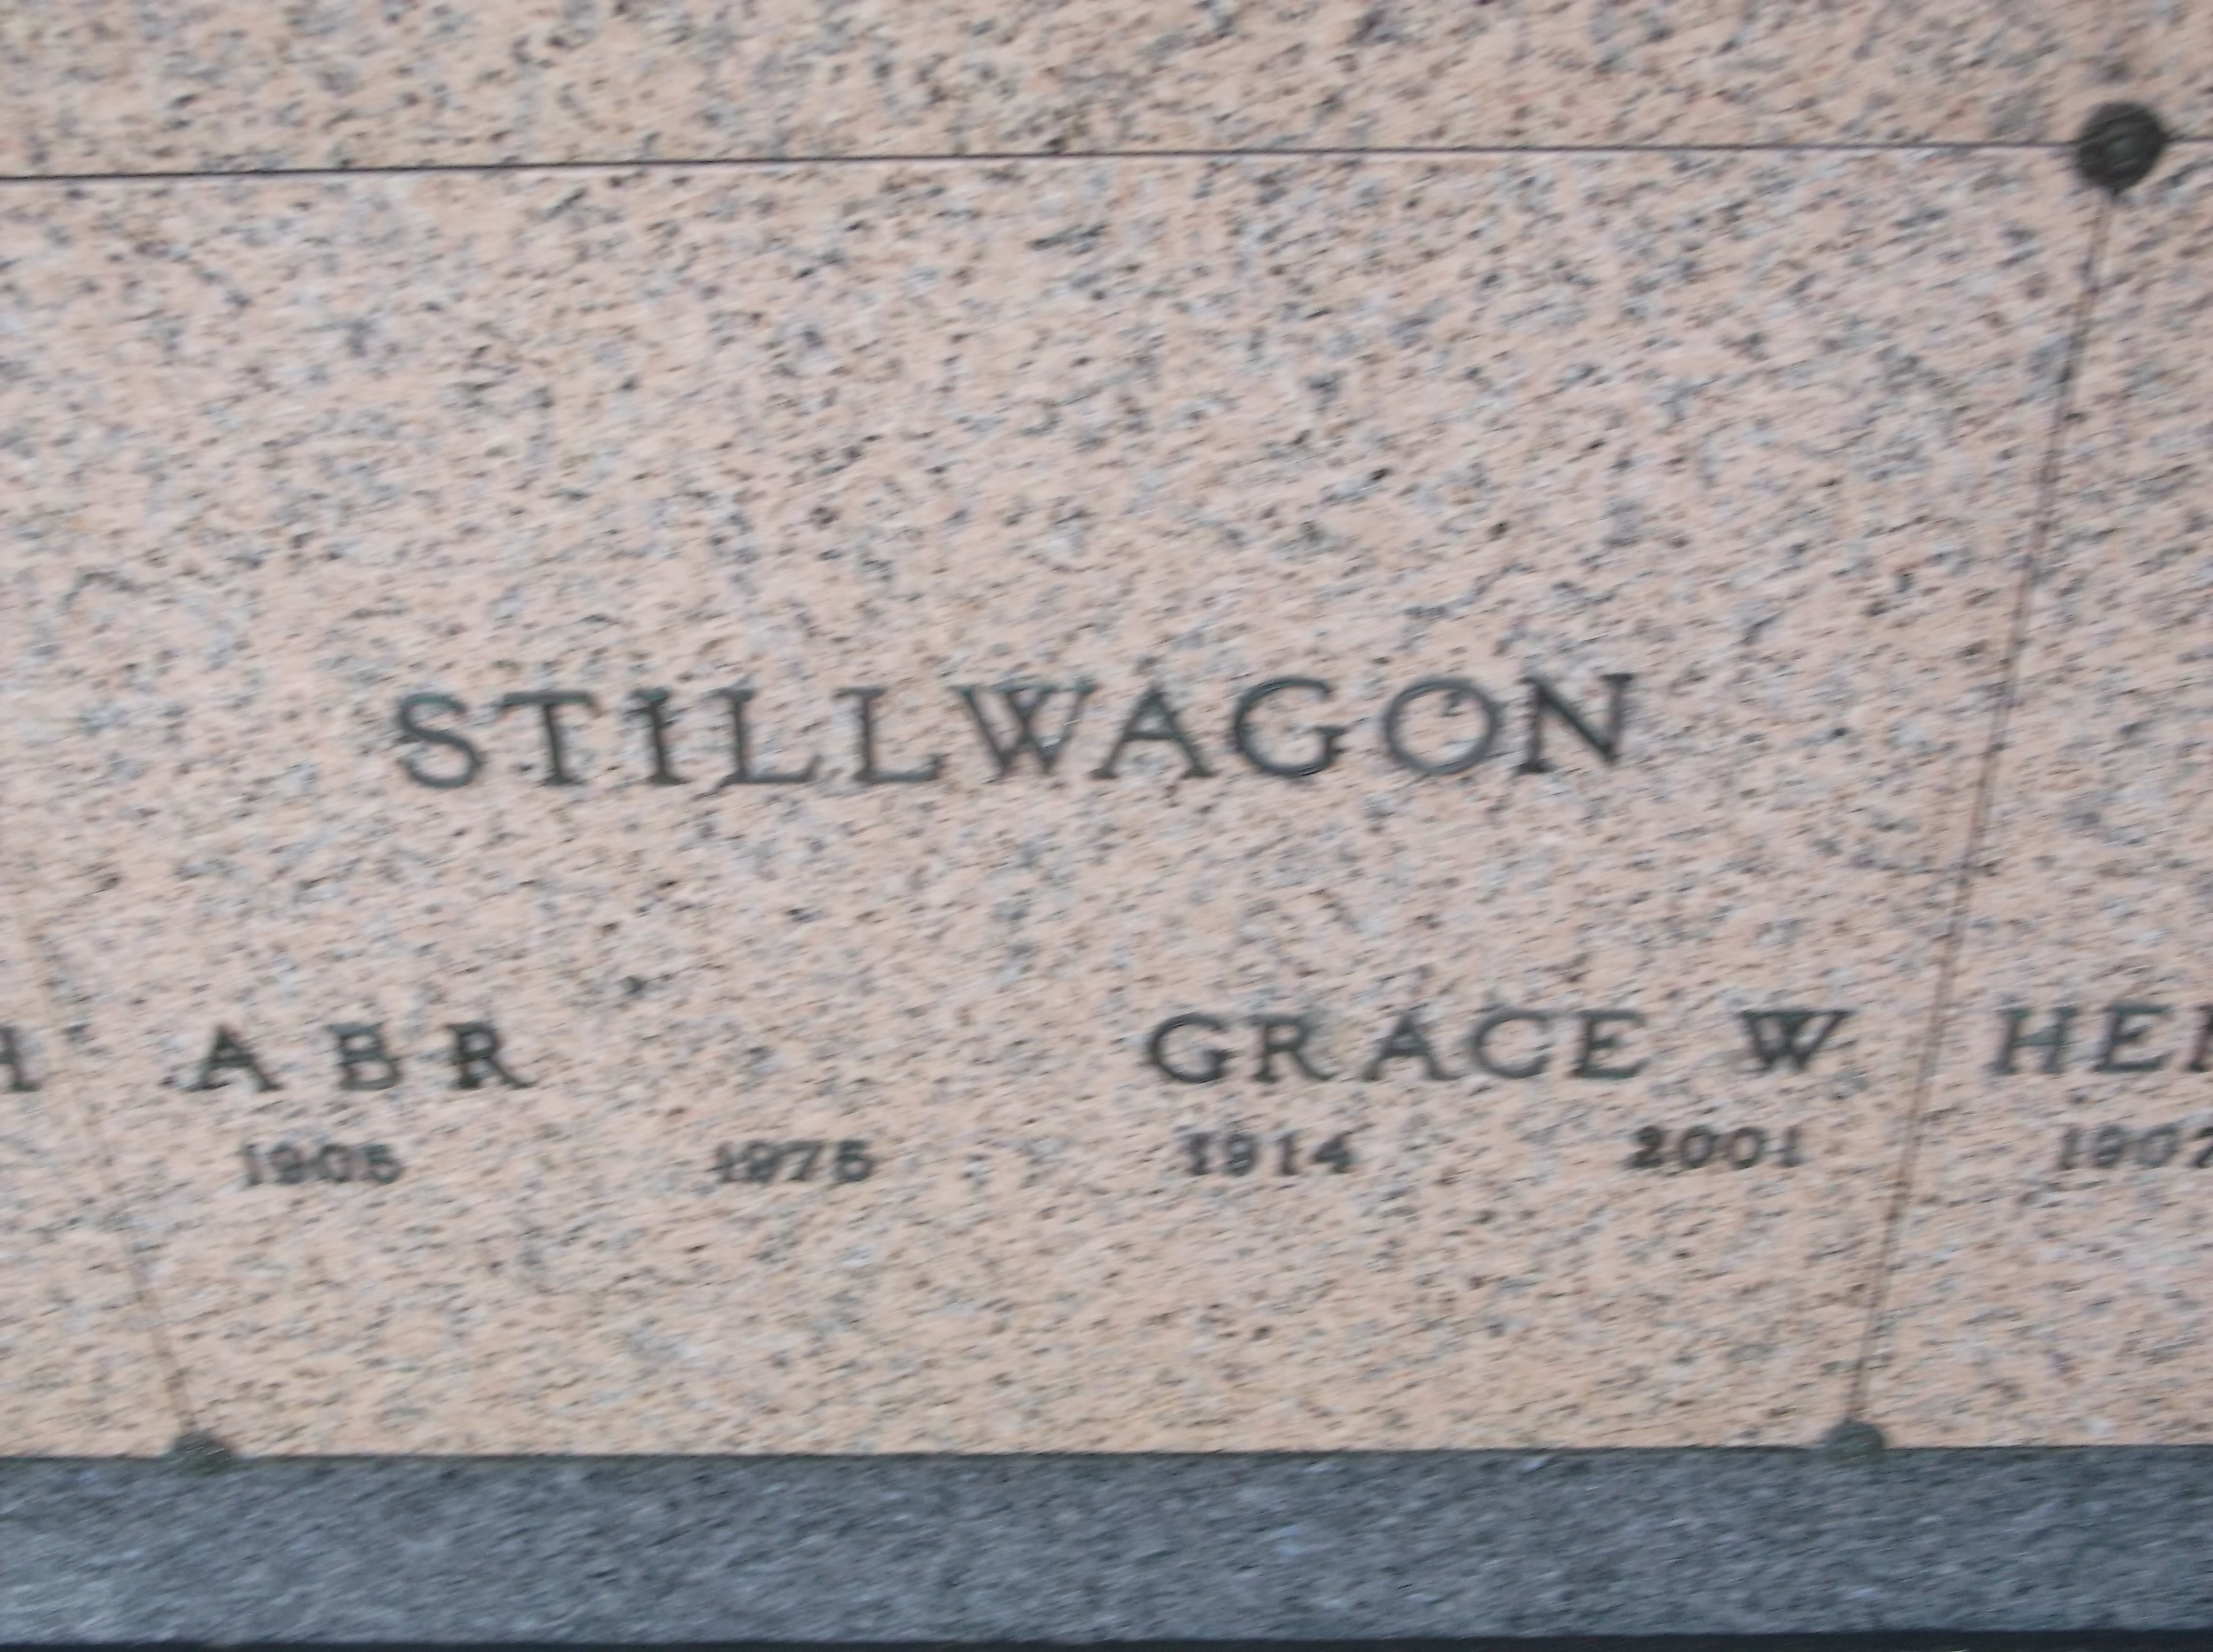 Grace W Stillwagon